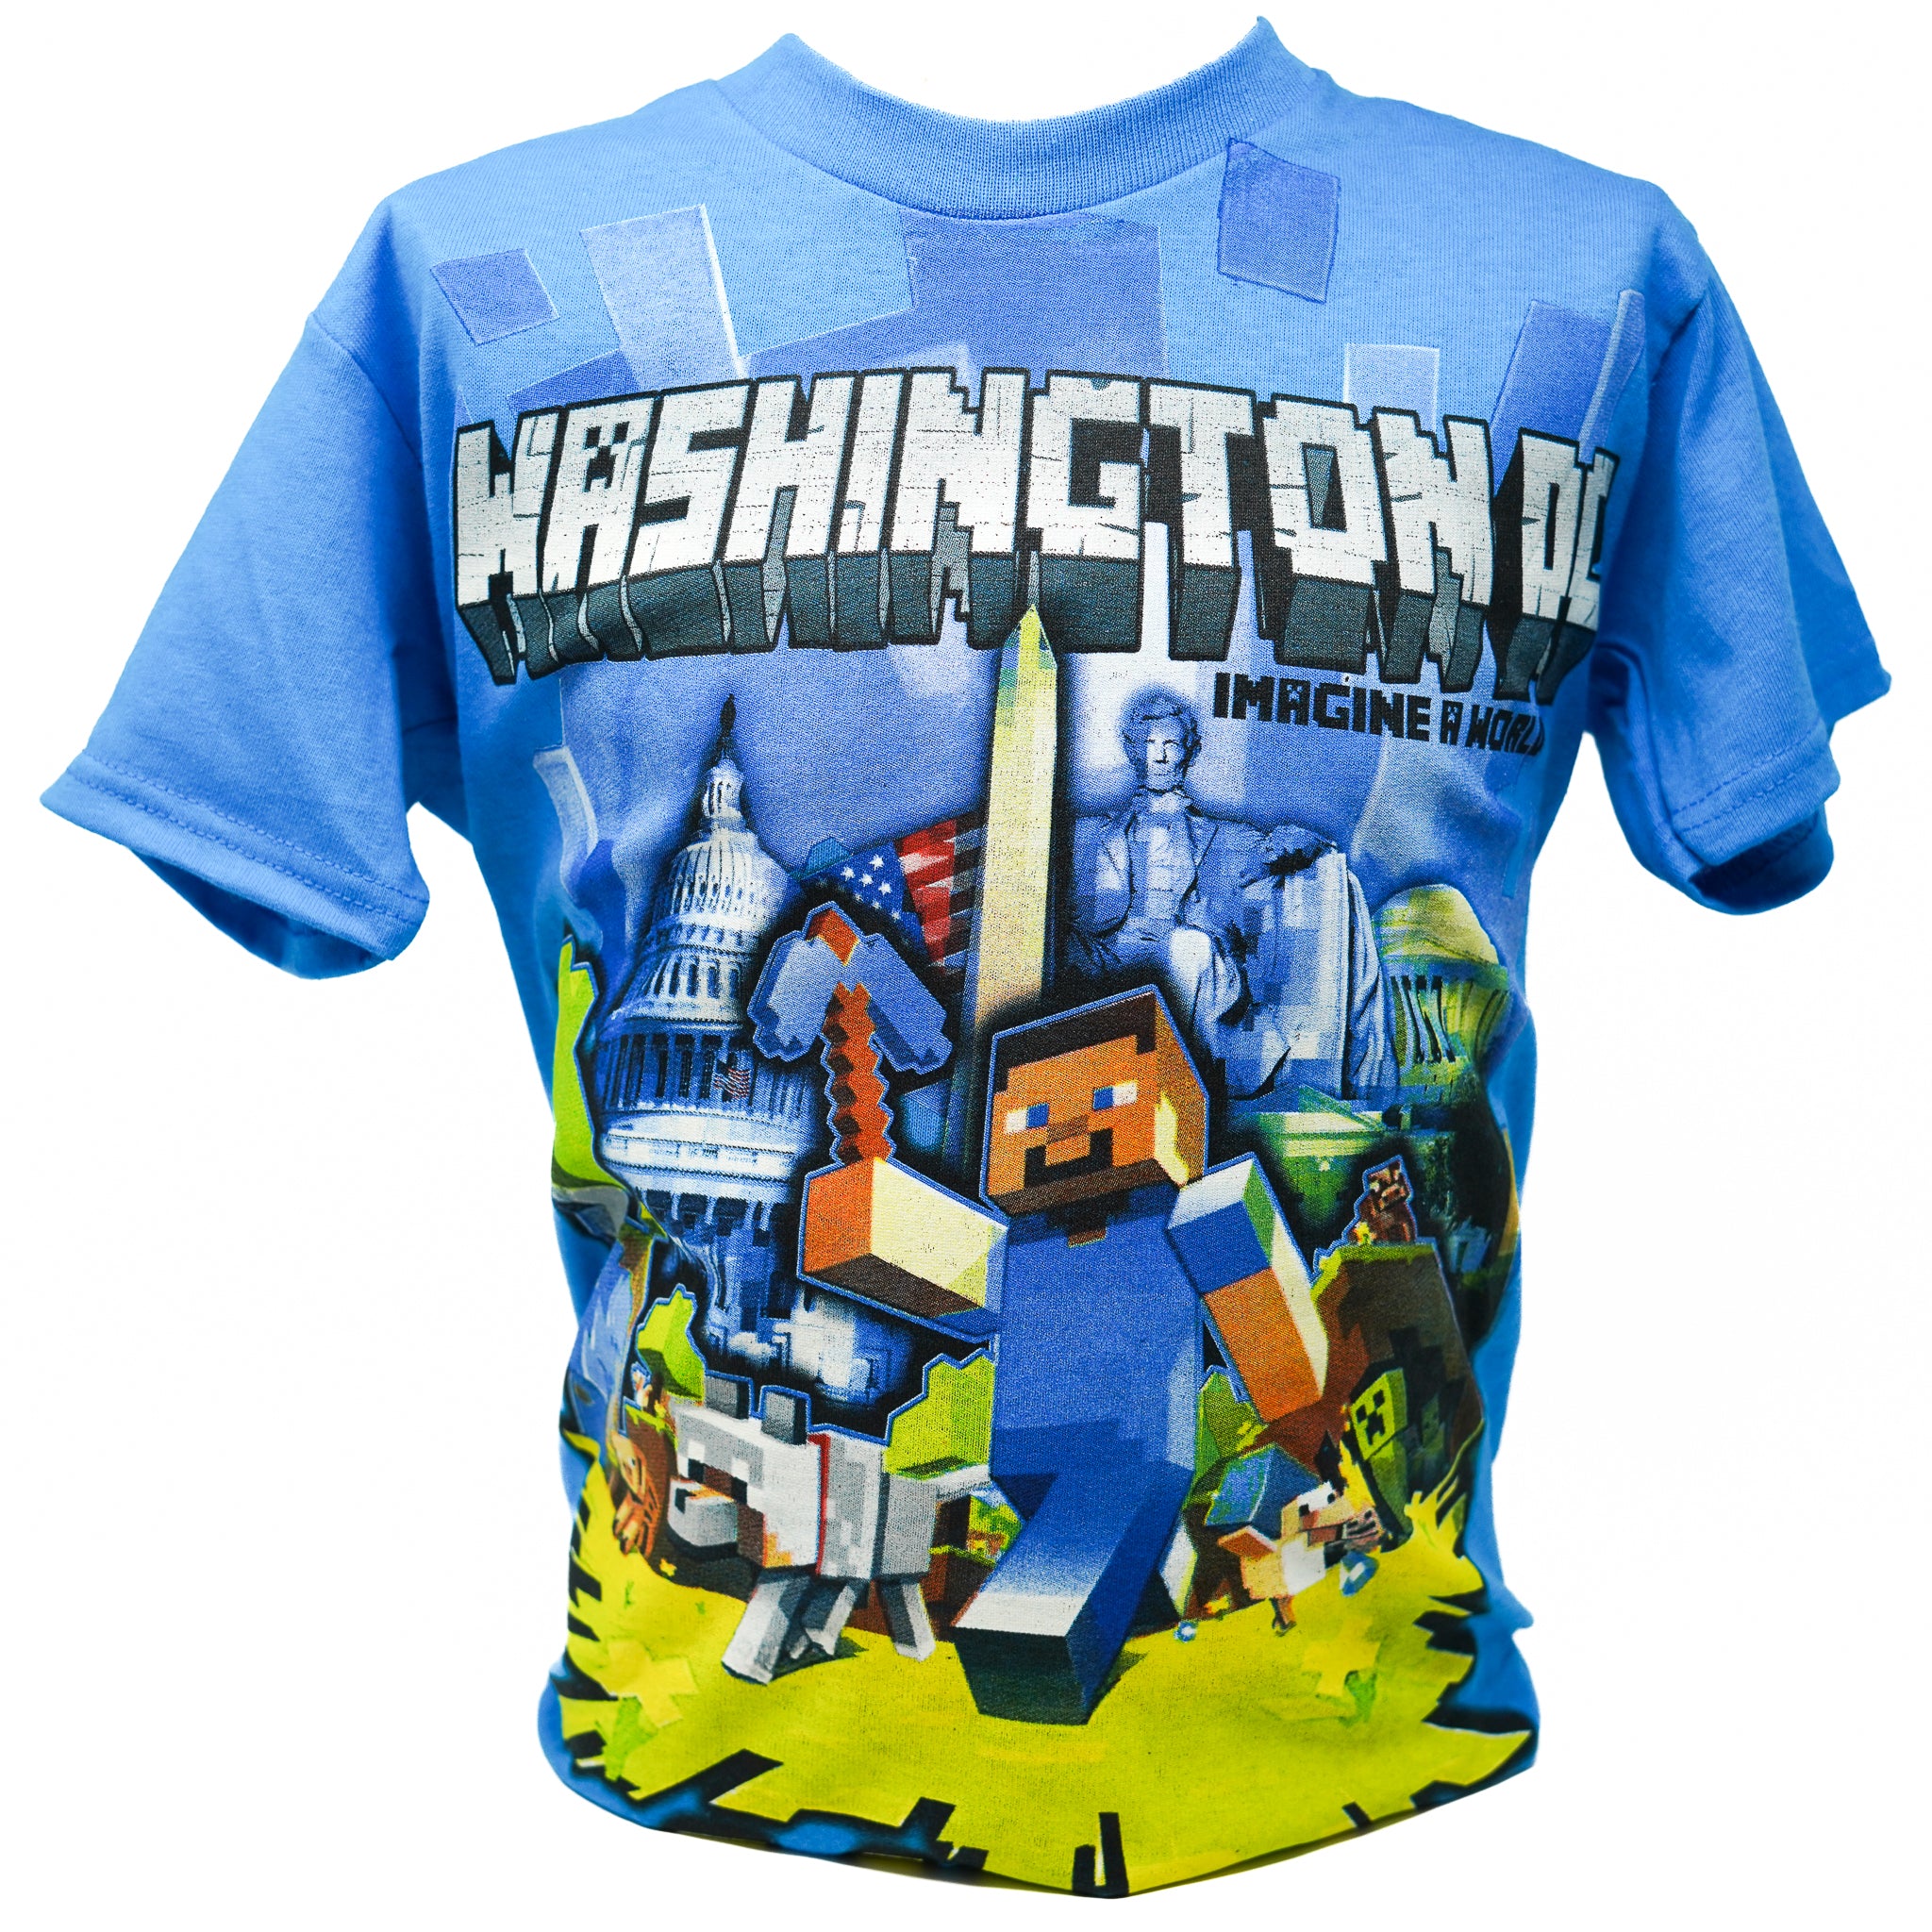 Minecraft Washington D.C. Kids T-Shirt